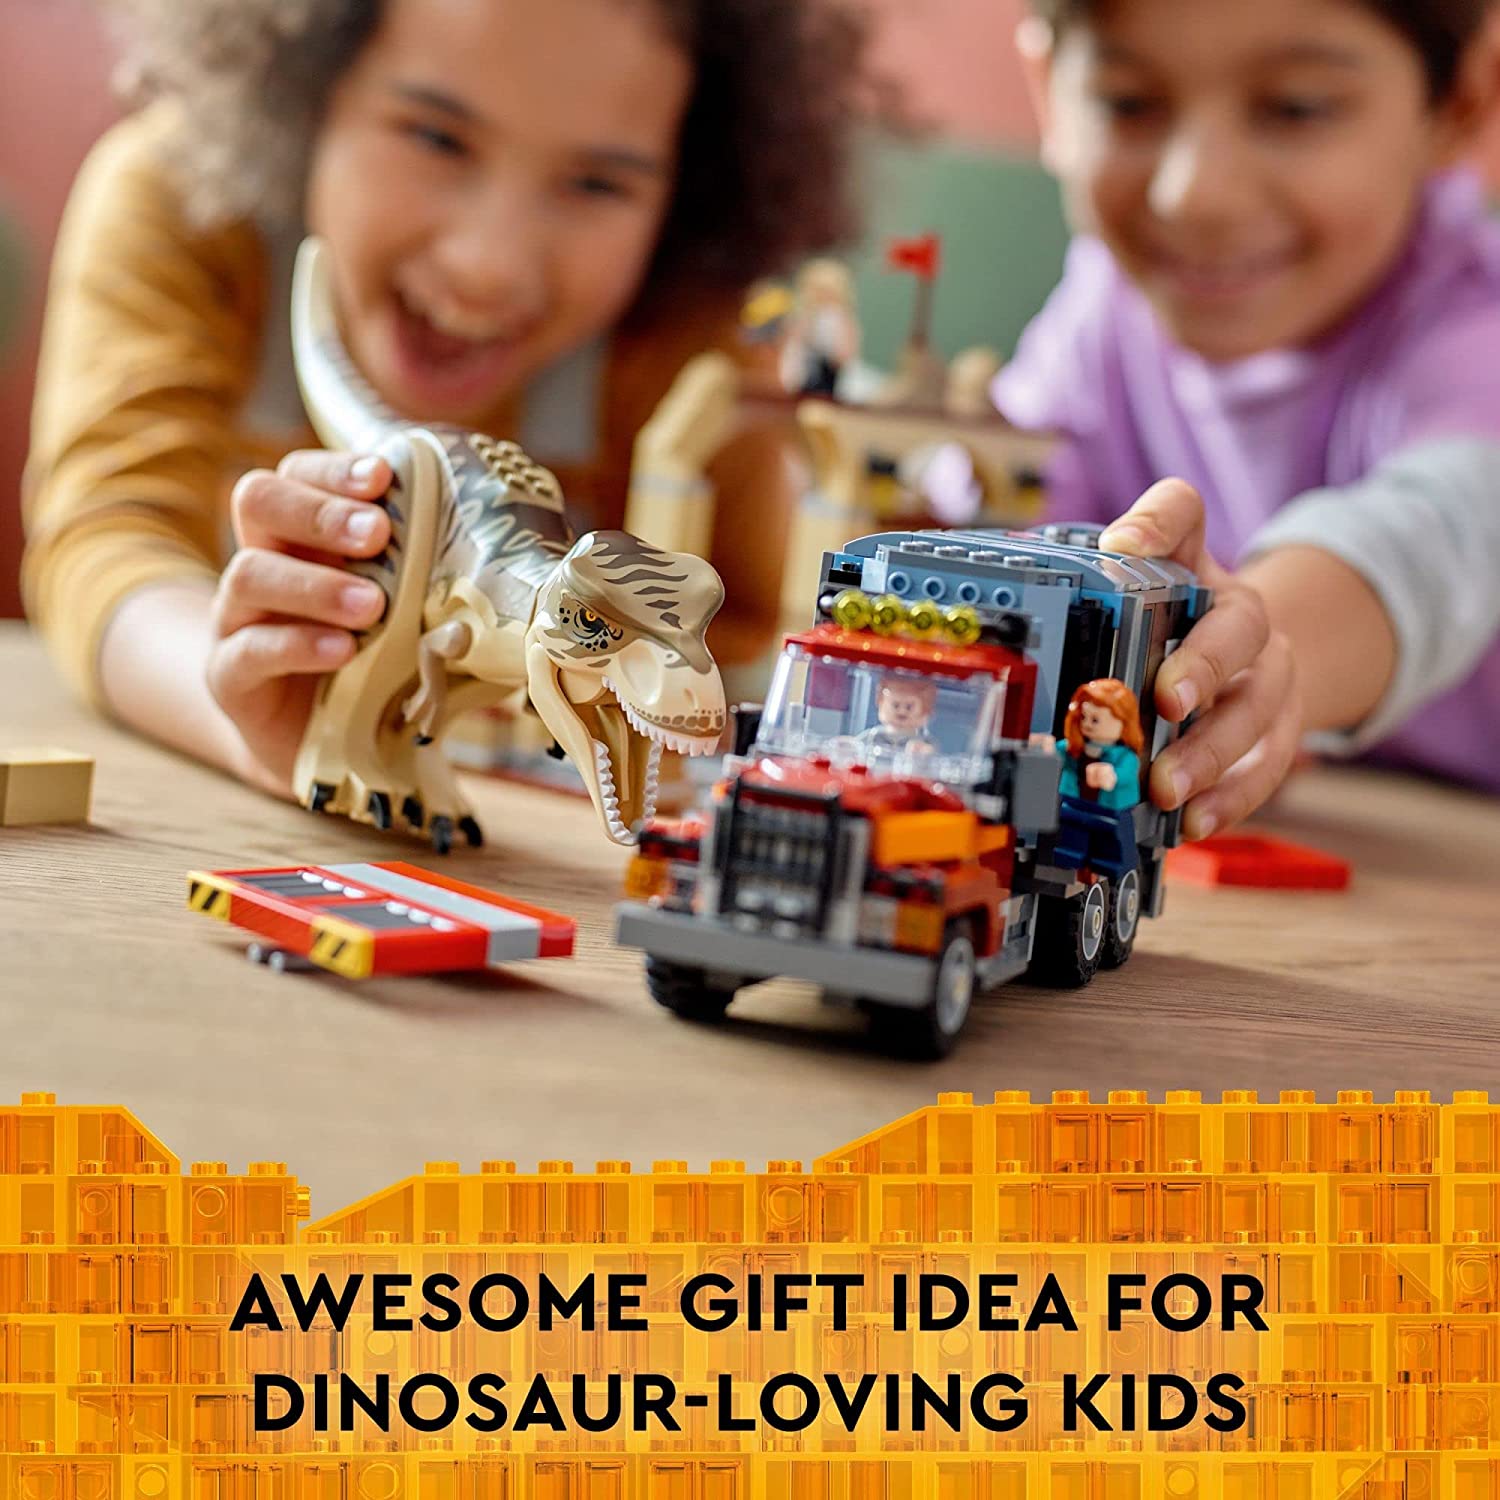 Lego Jurassic World - Trex And Atrociraptor Dinosaur